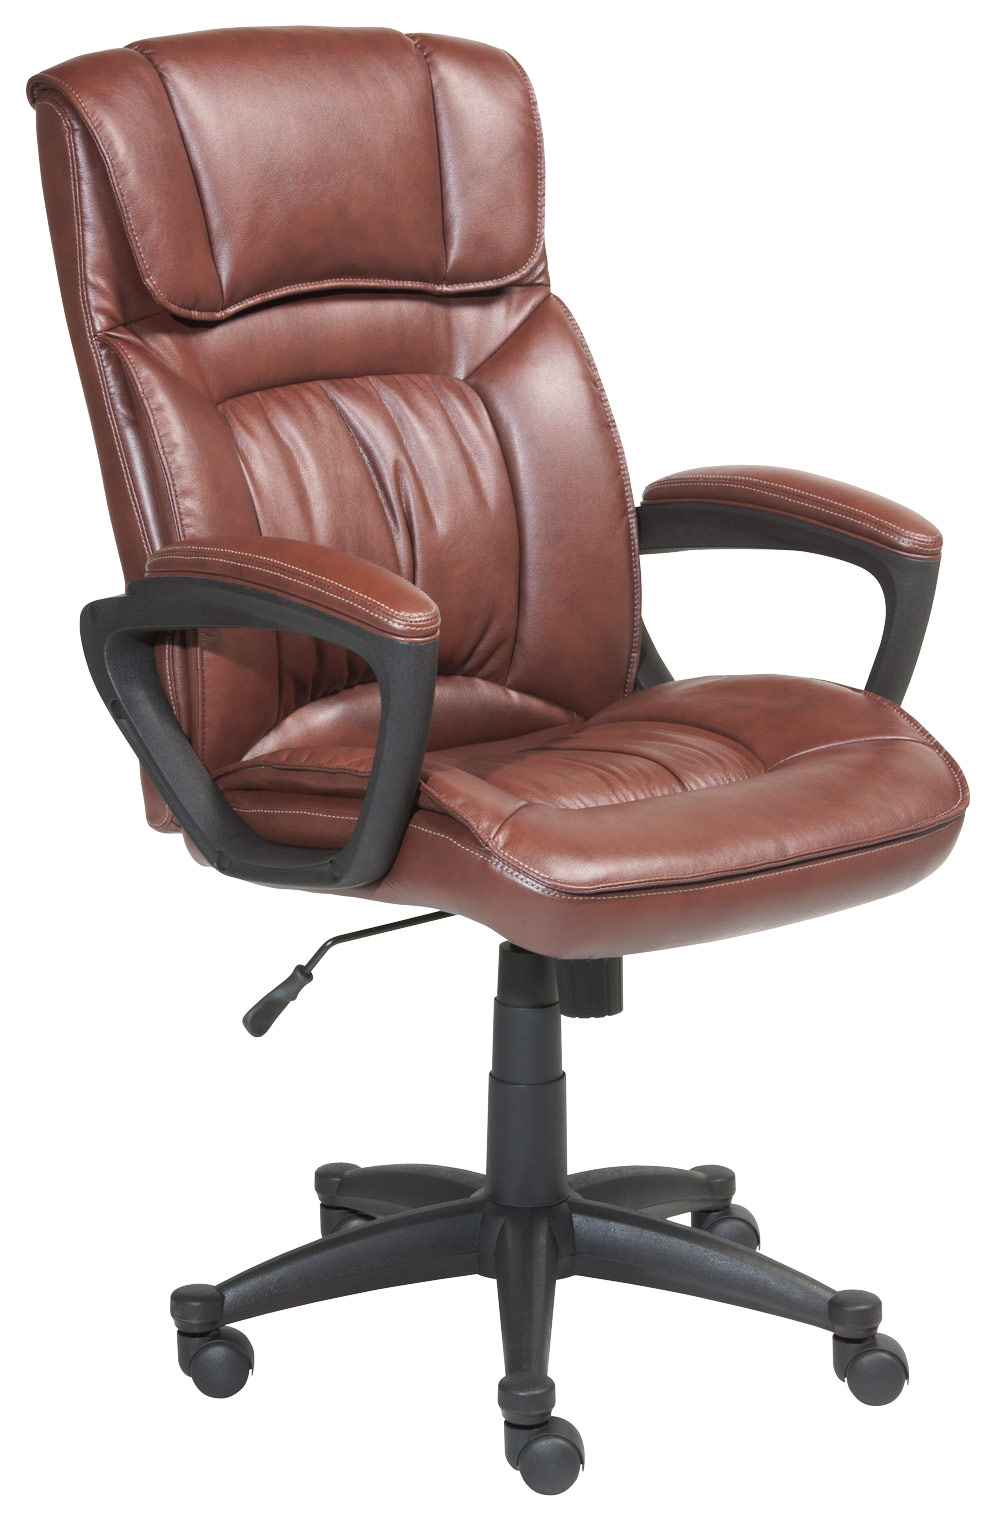 Serta Executive Office Chair Cognac Brown 43504 - Best Buy